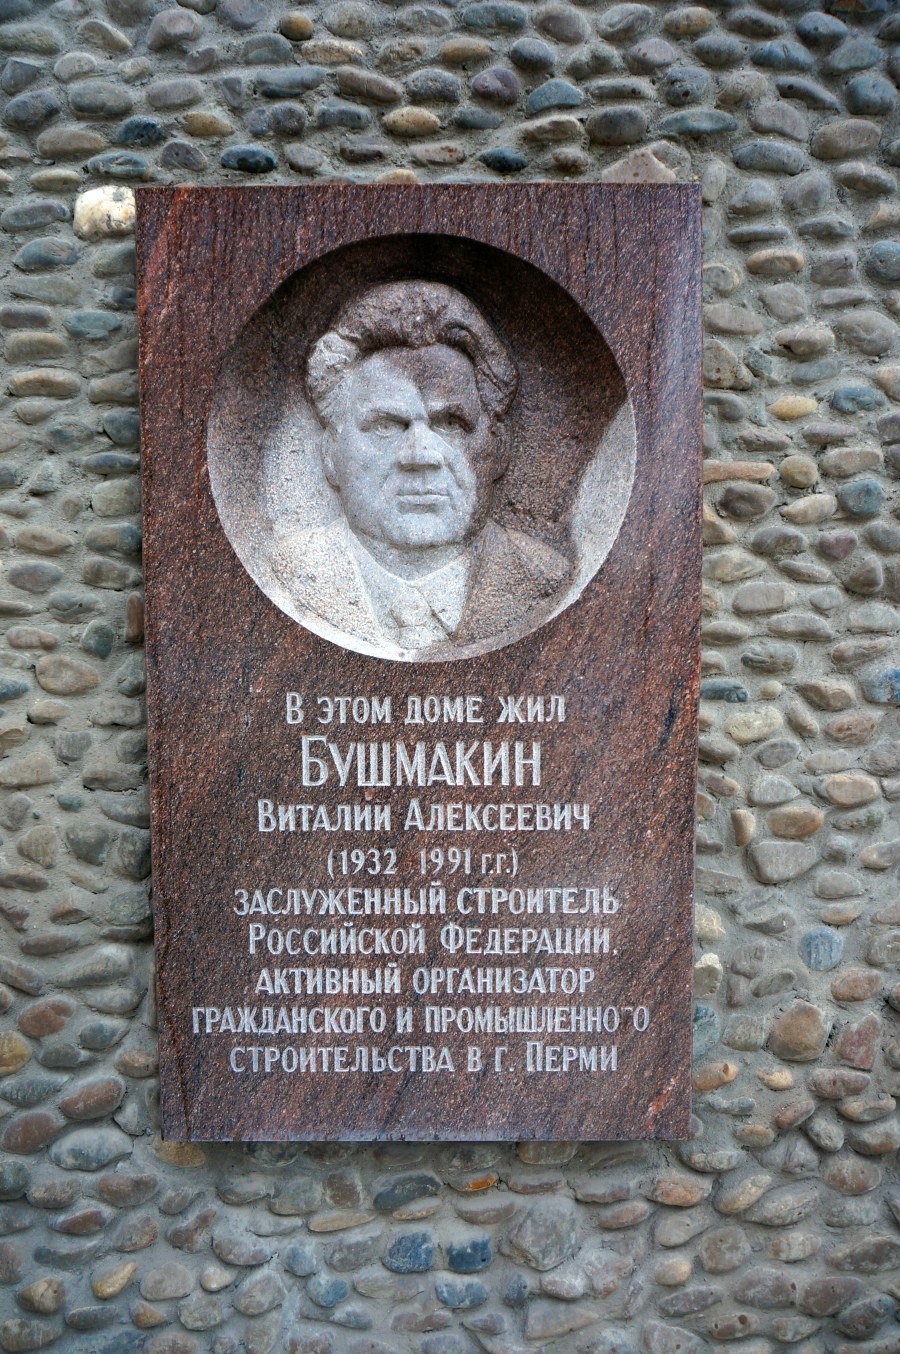 Perm, Улица 25 Октября, 22б. Perm — Memorial plaques